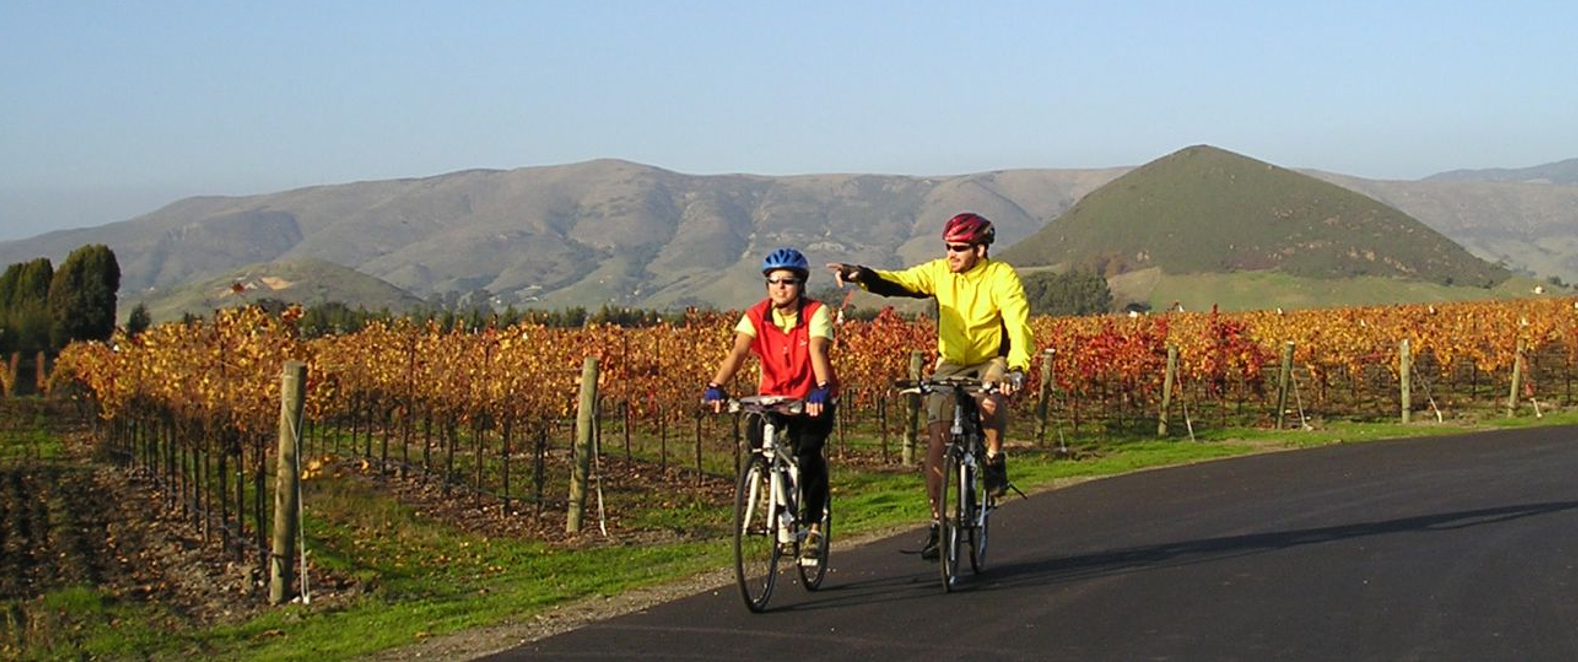 Touring Edna Valley’s vineyards via bicycle. Photo courtesy CaliforniaBicycleTour.com.